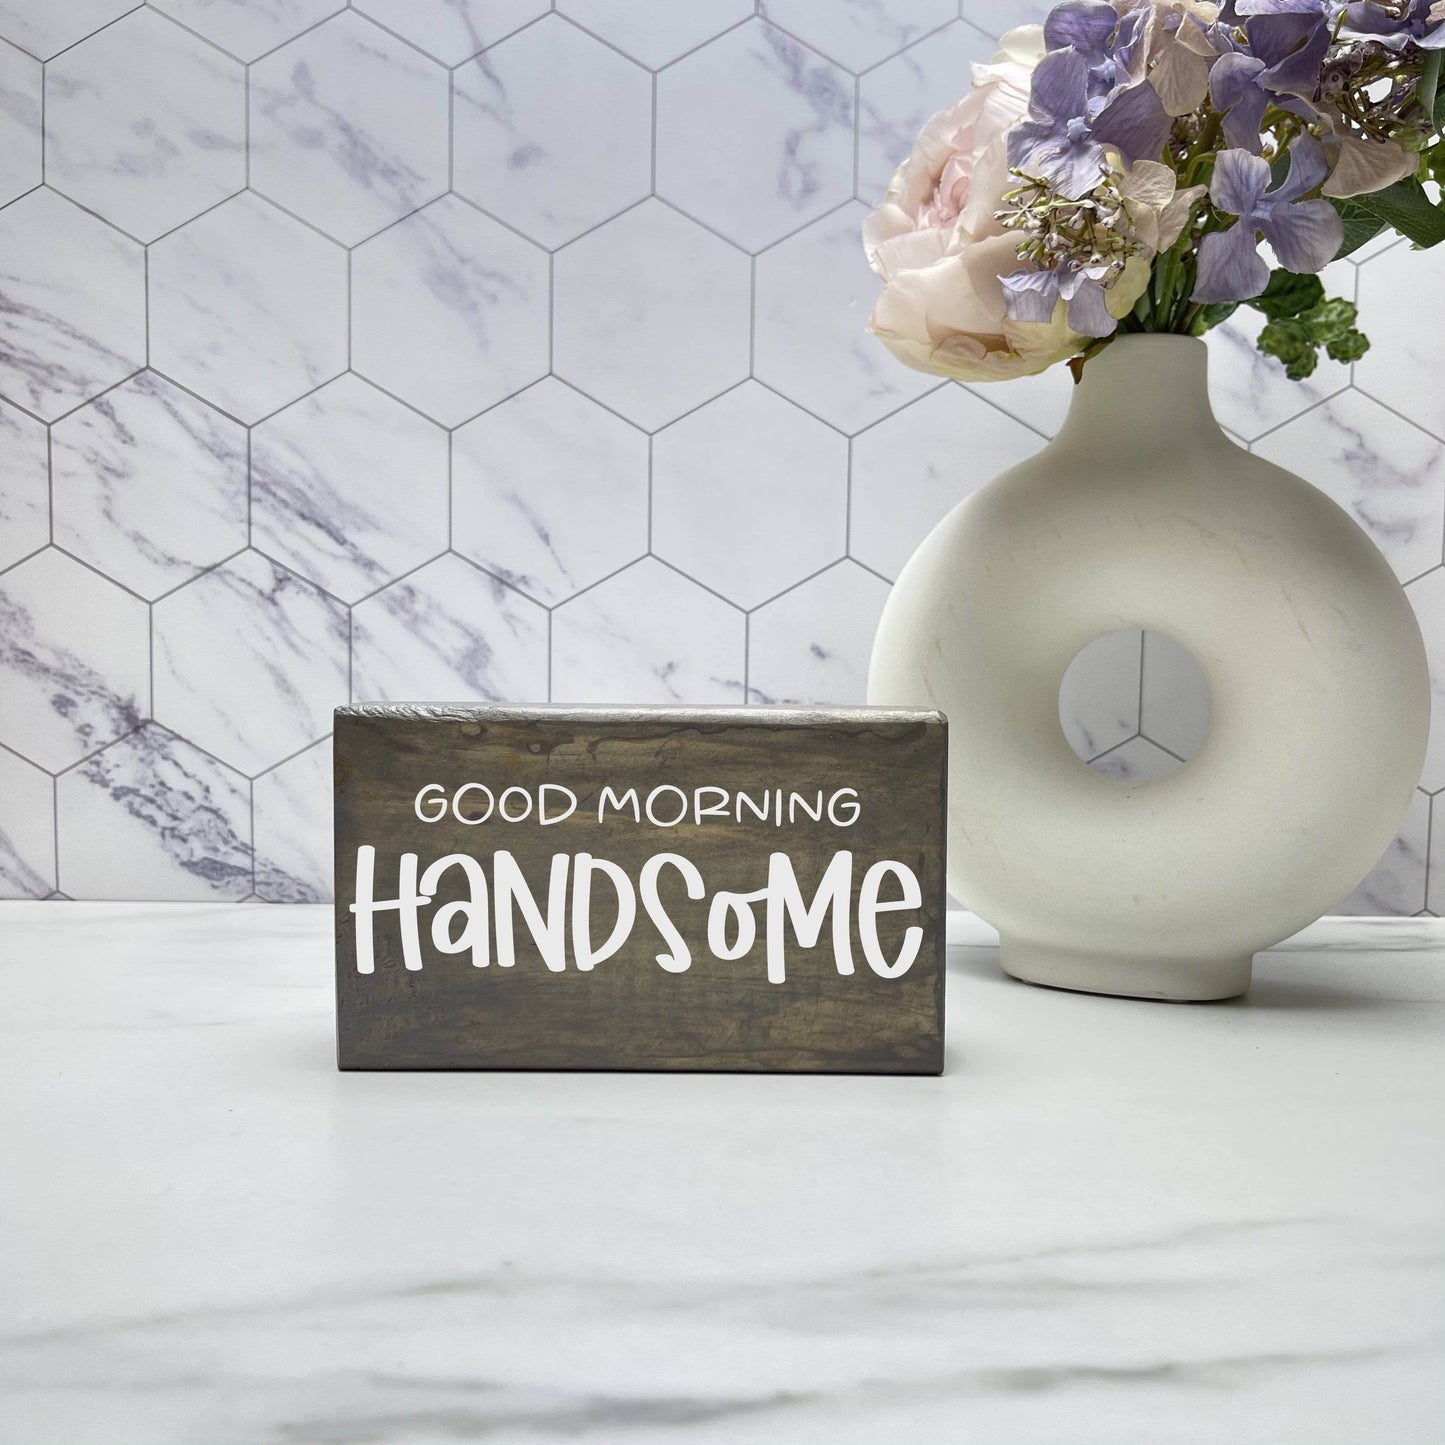 Good Morning Handsome, Bathroom Wood Sign, Bathroom Decor, Home Decor